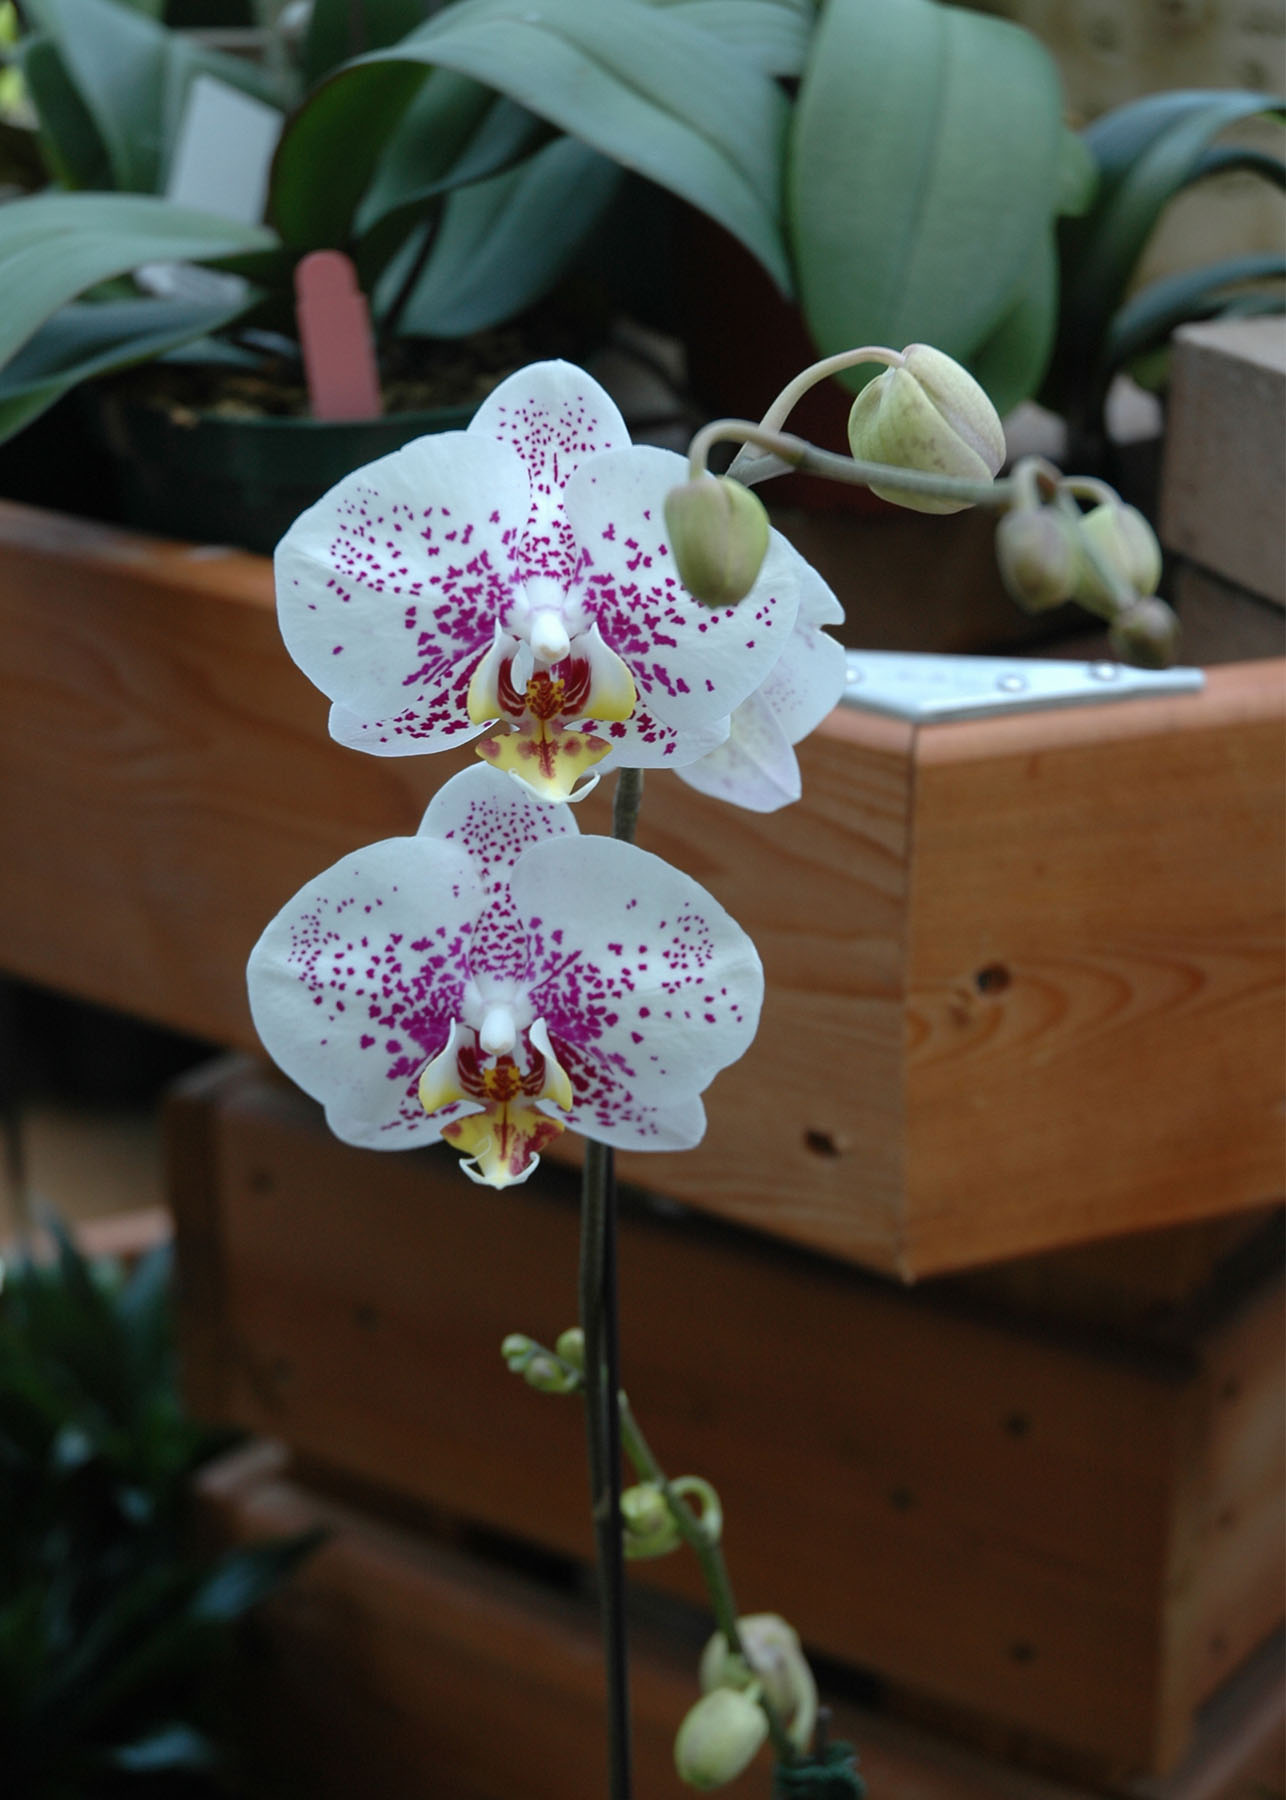 Phalaeonopsis orchid growing indoors